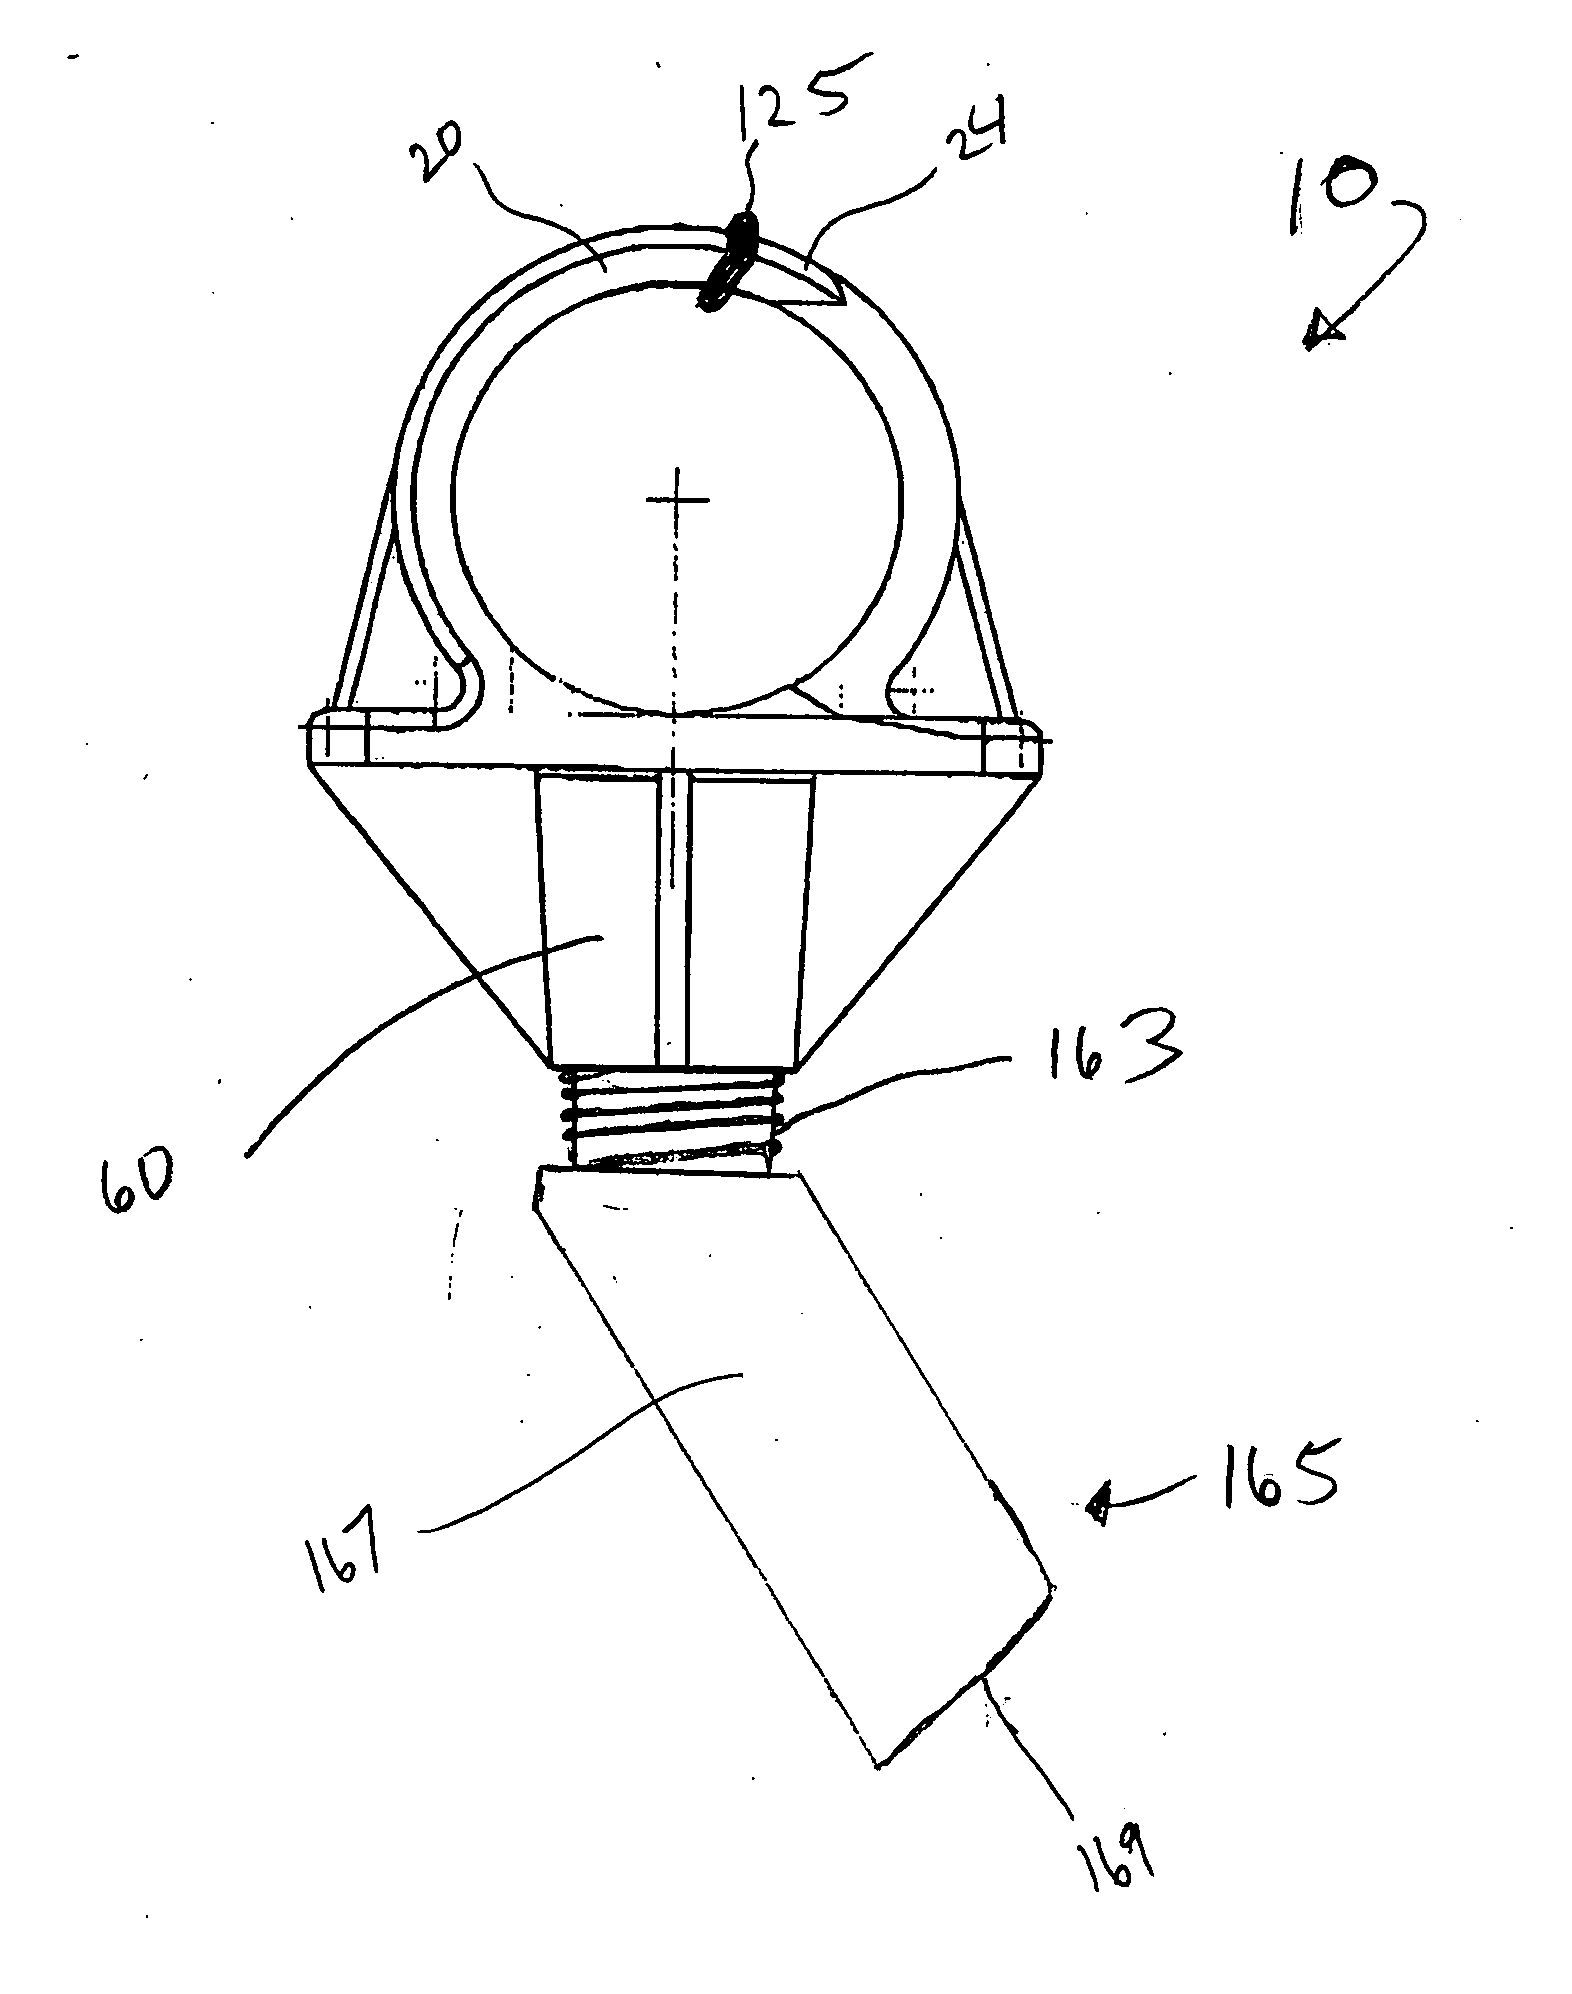 Light bulb changer/holder apparatus